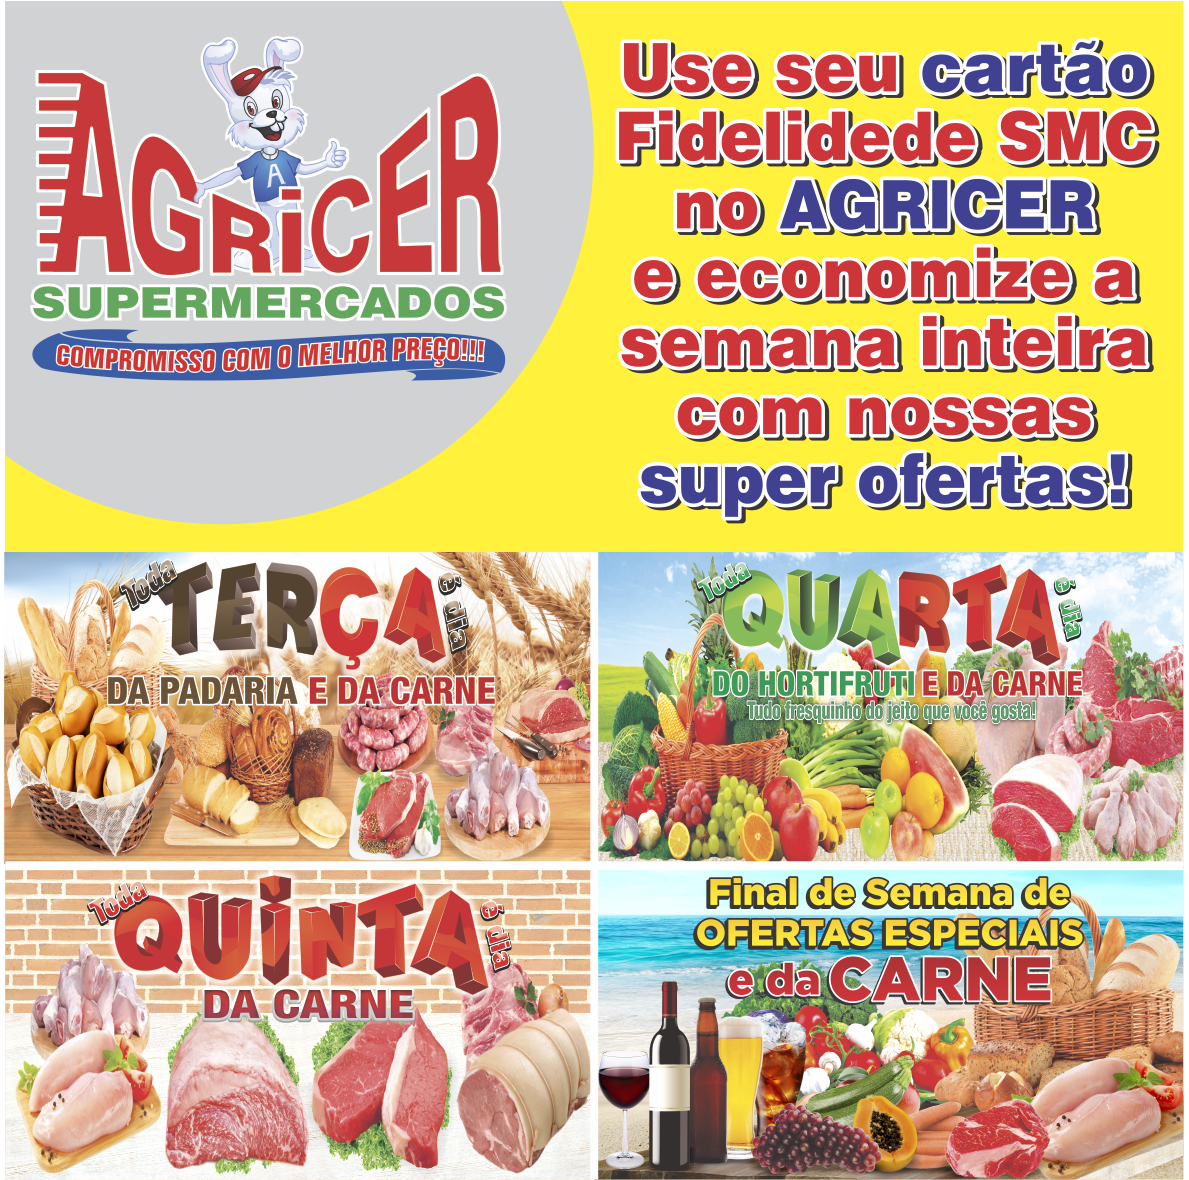 Agricer Supermercados added a new - Agricer Supermercados